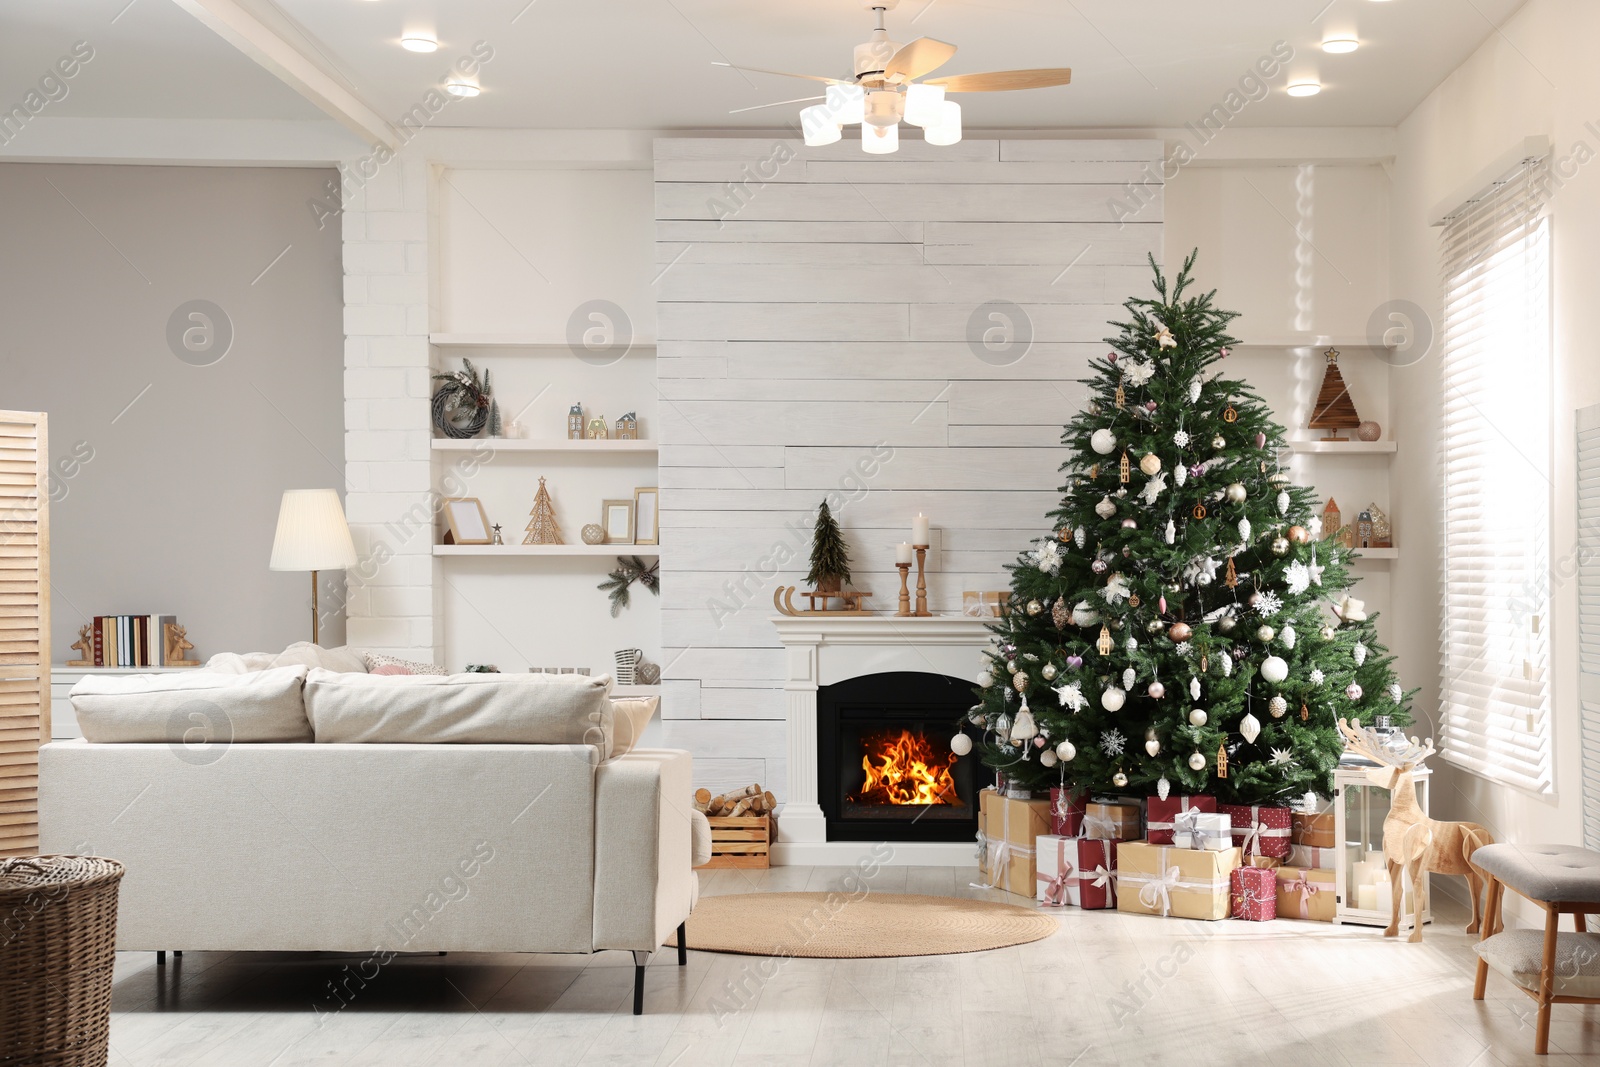 Photo of Festive living room interior with beautiful Christmas tree